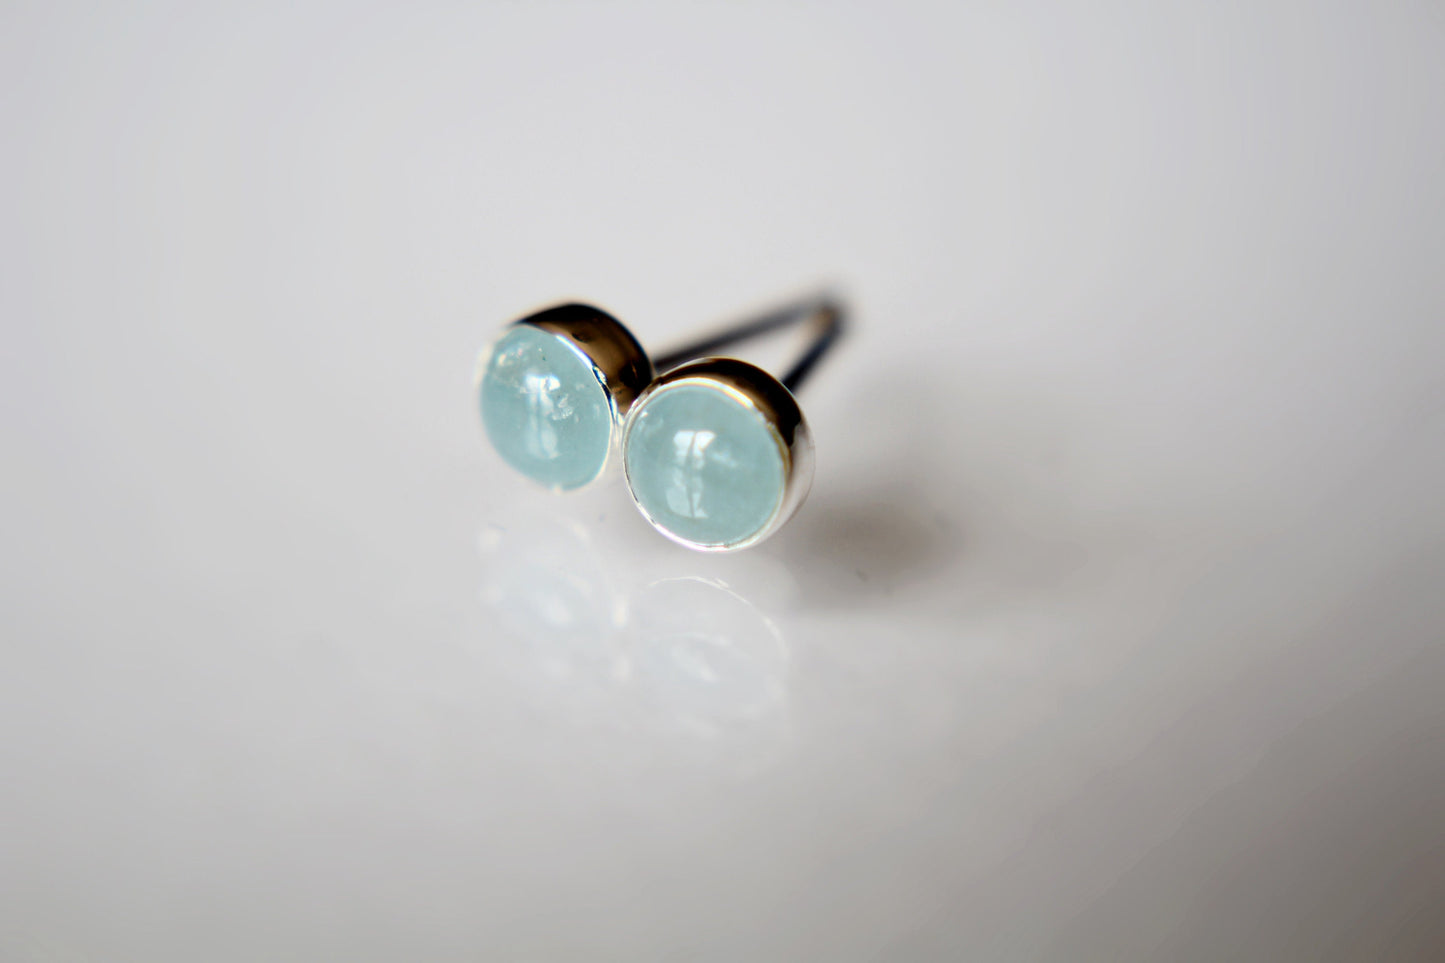 Aquamarine Earrings, Gemstone Earrings, Sterling Earrings, Post Earrings, Pale Blue Post Earrings, Small Earrings, Minimalist Earrings, Gift